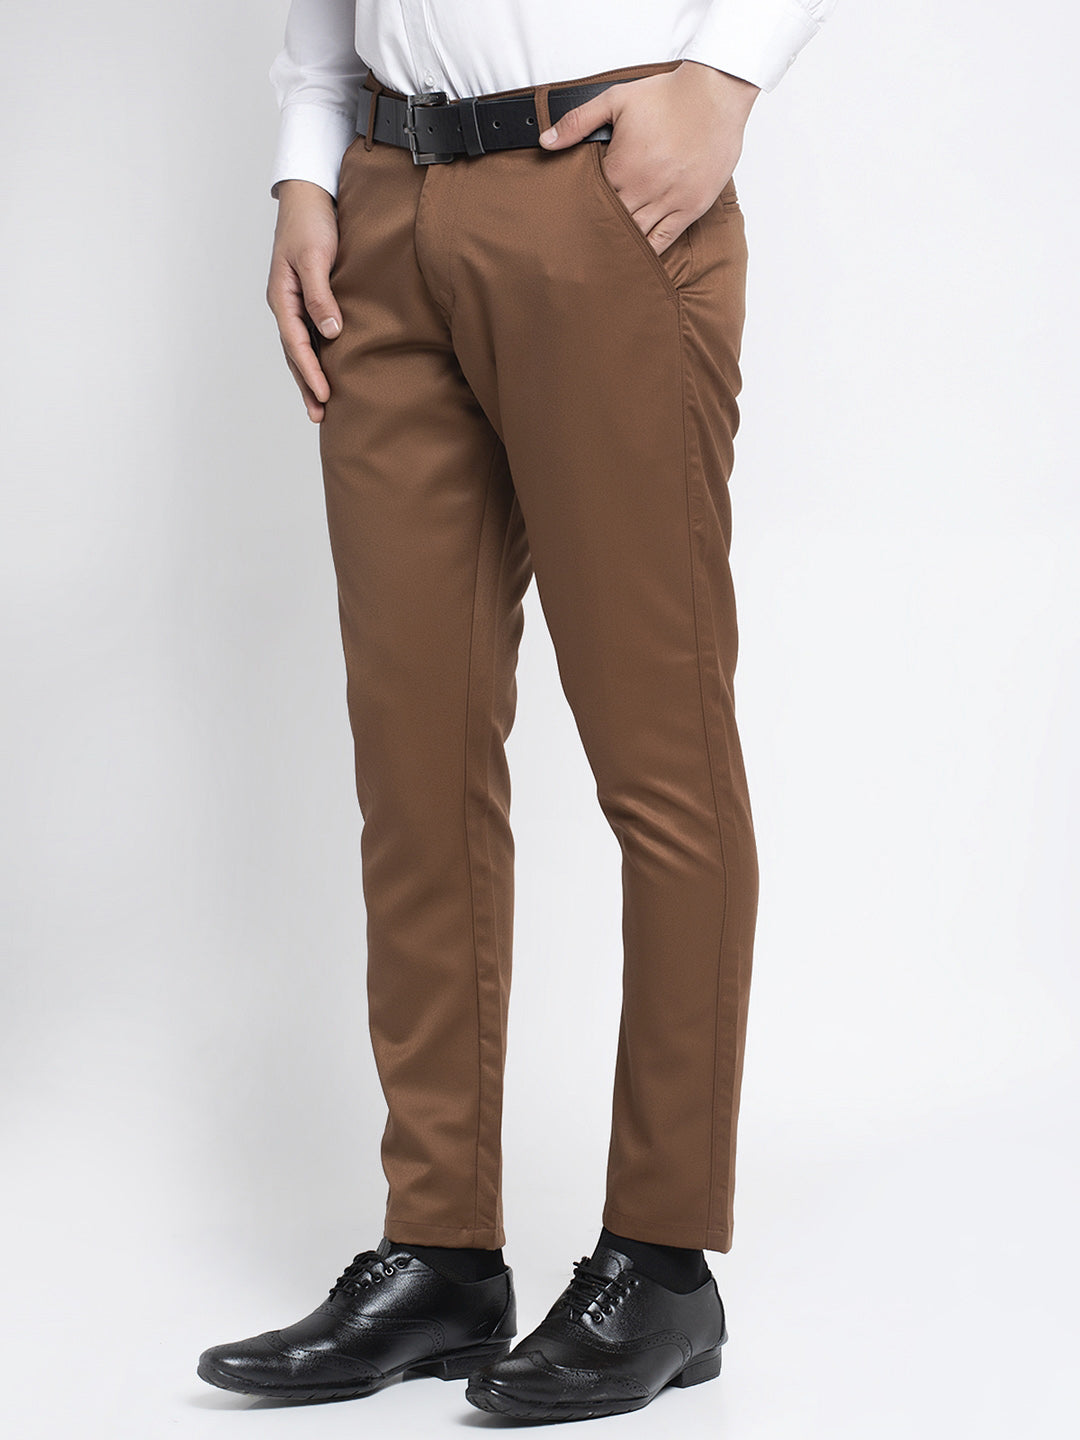 Jainish Men's Brown Tapered Fit Formal Trousers